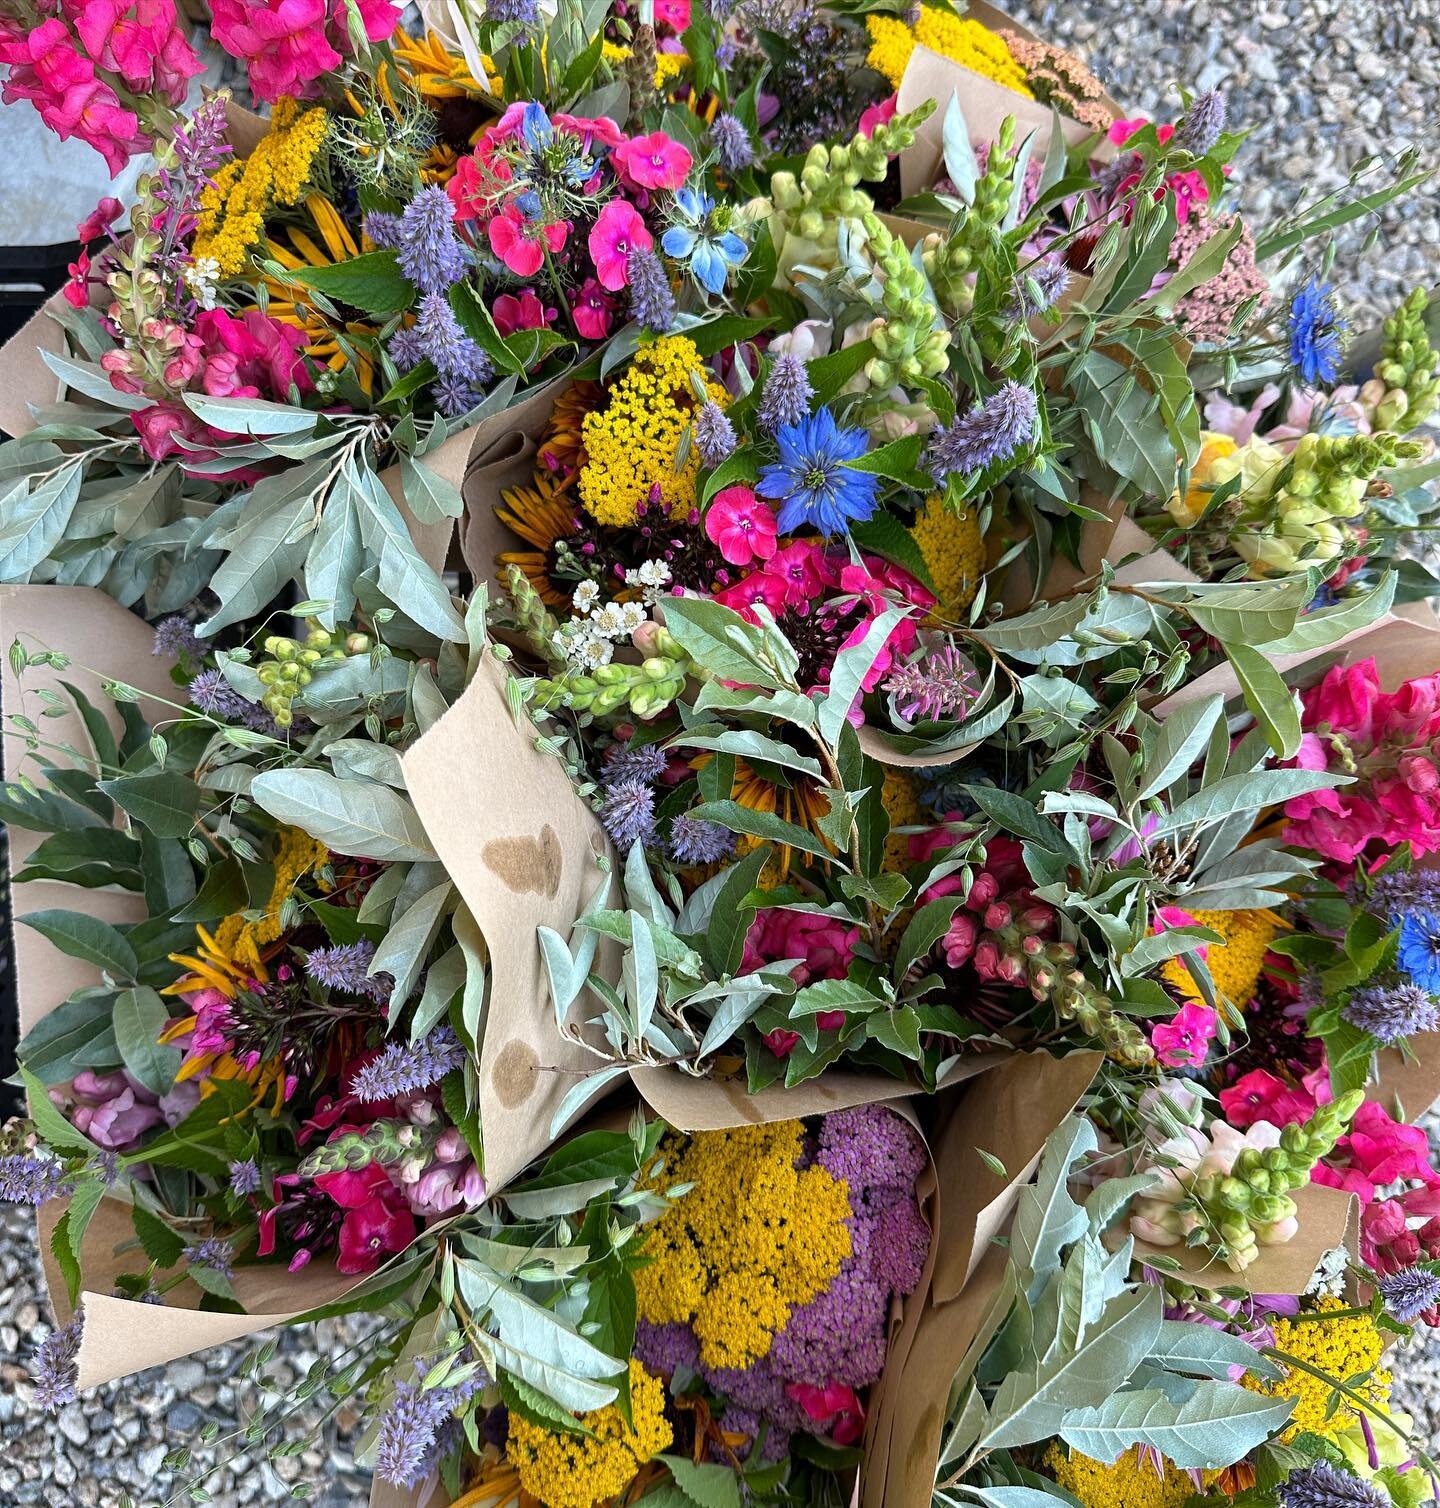 INCOMING: Best market flowers in #litchfieldct 😉and GORGEOUS FAVA BEANS and also SUGAR SNAPS @litchfieldhillsfarmfreshmarket